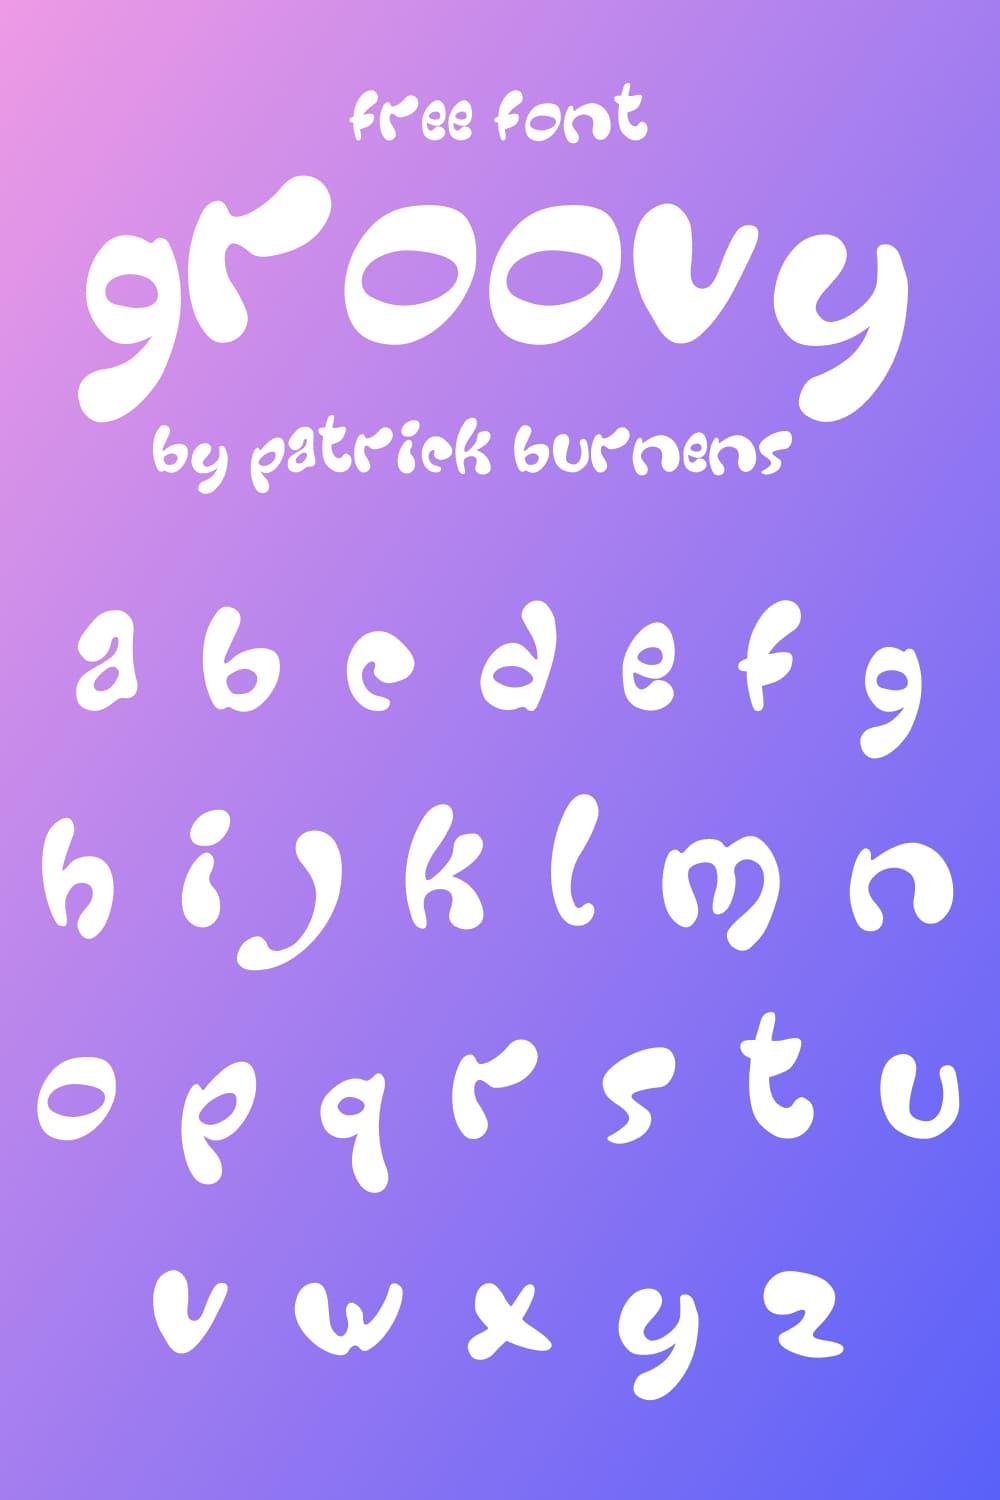 Free groovy font - Pinterest.